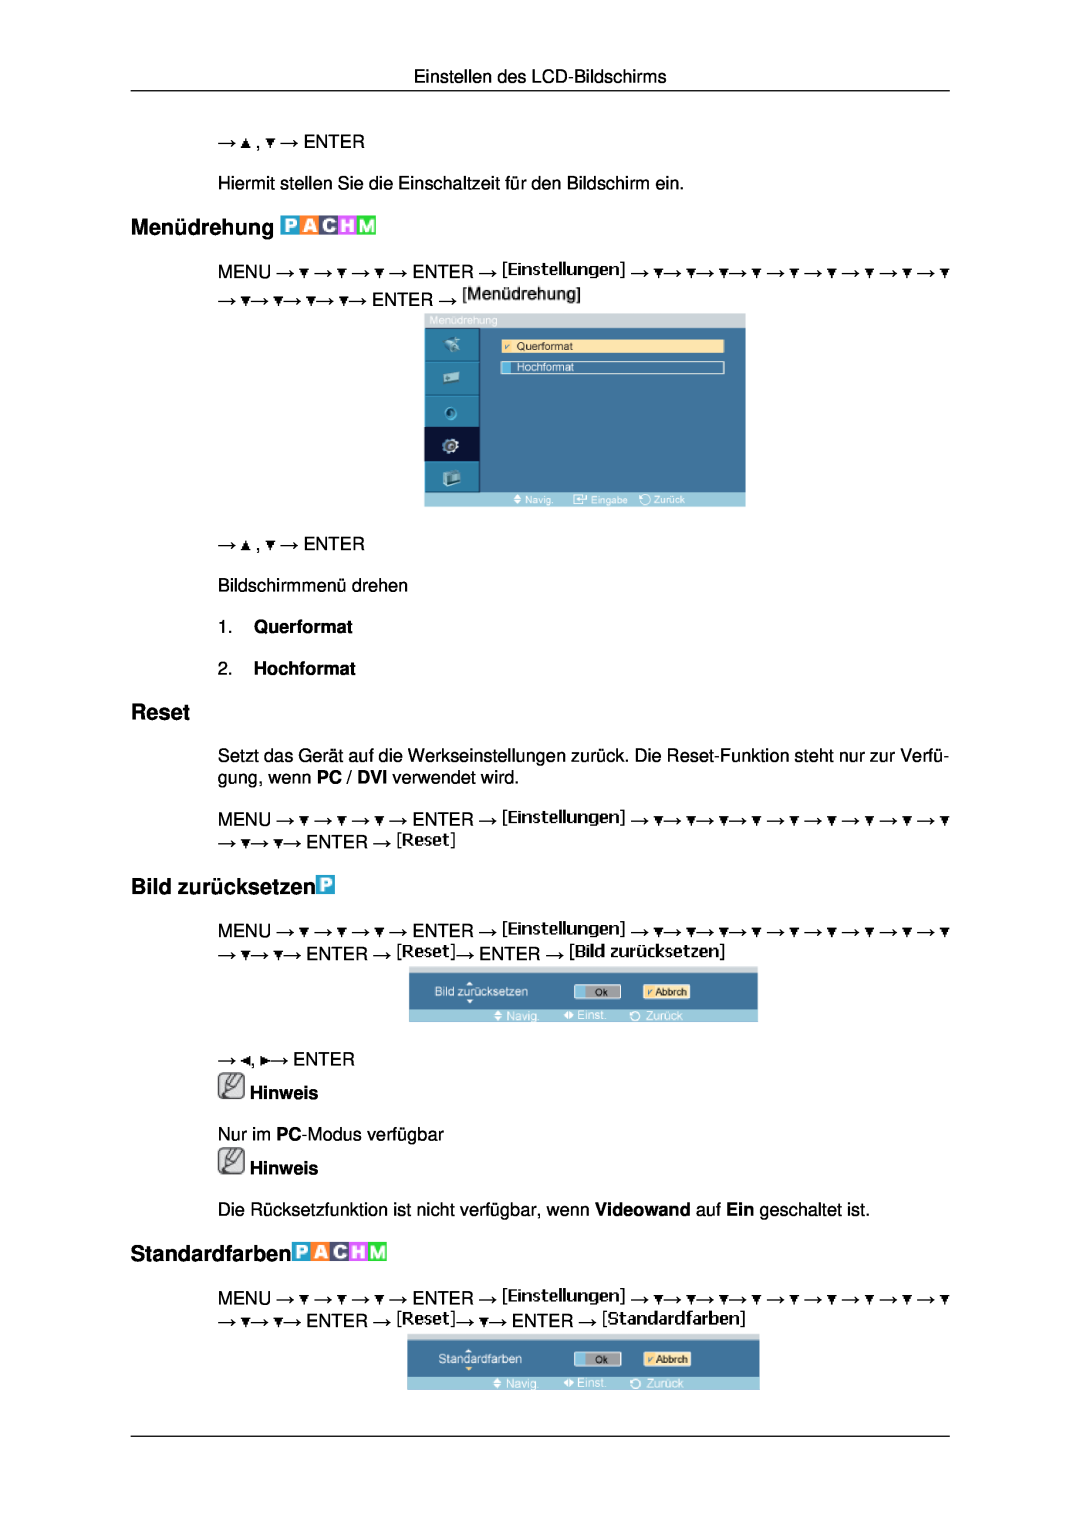 Samsung LH46MRTLBC/EN manual Menüdrehung, Reset, Bild zurücksetzen, Standardfarben, Querformat 2. Hochformat, Hinweis 